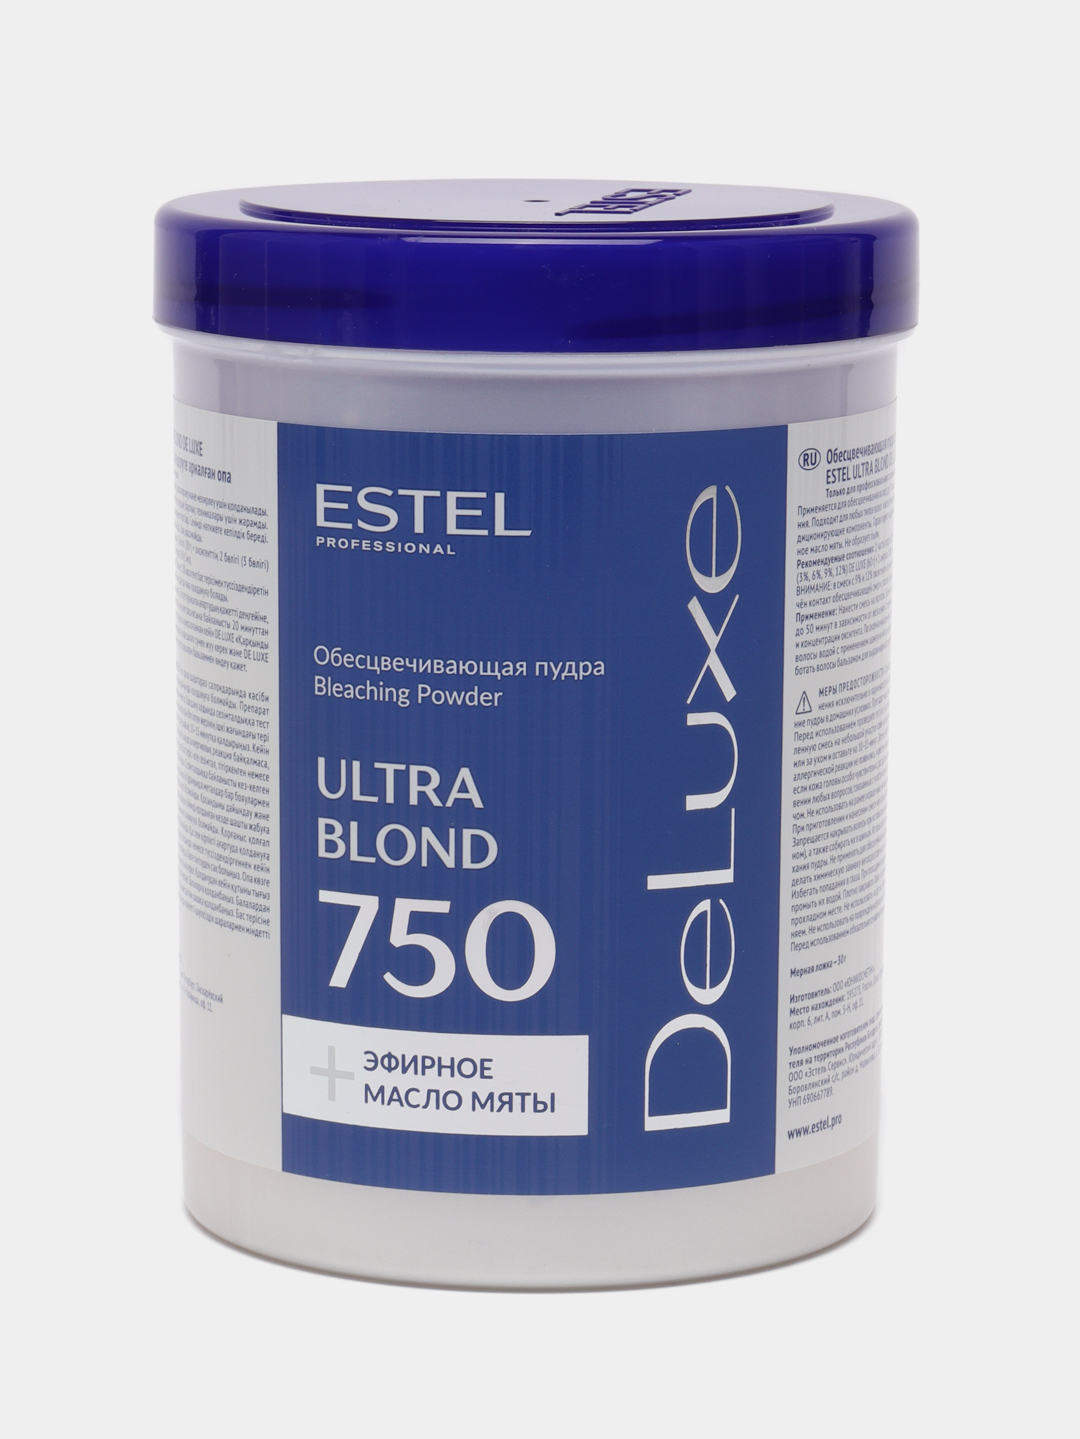 Estel De Luxe Ultra Blond Powder - Обесцвечивающая пудра 750 гр